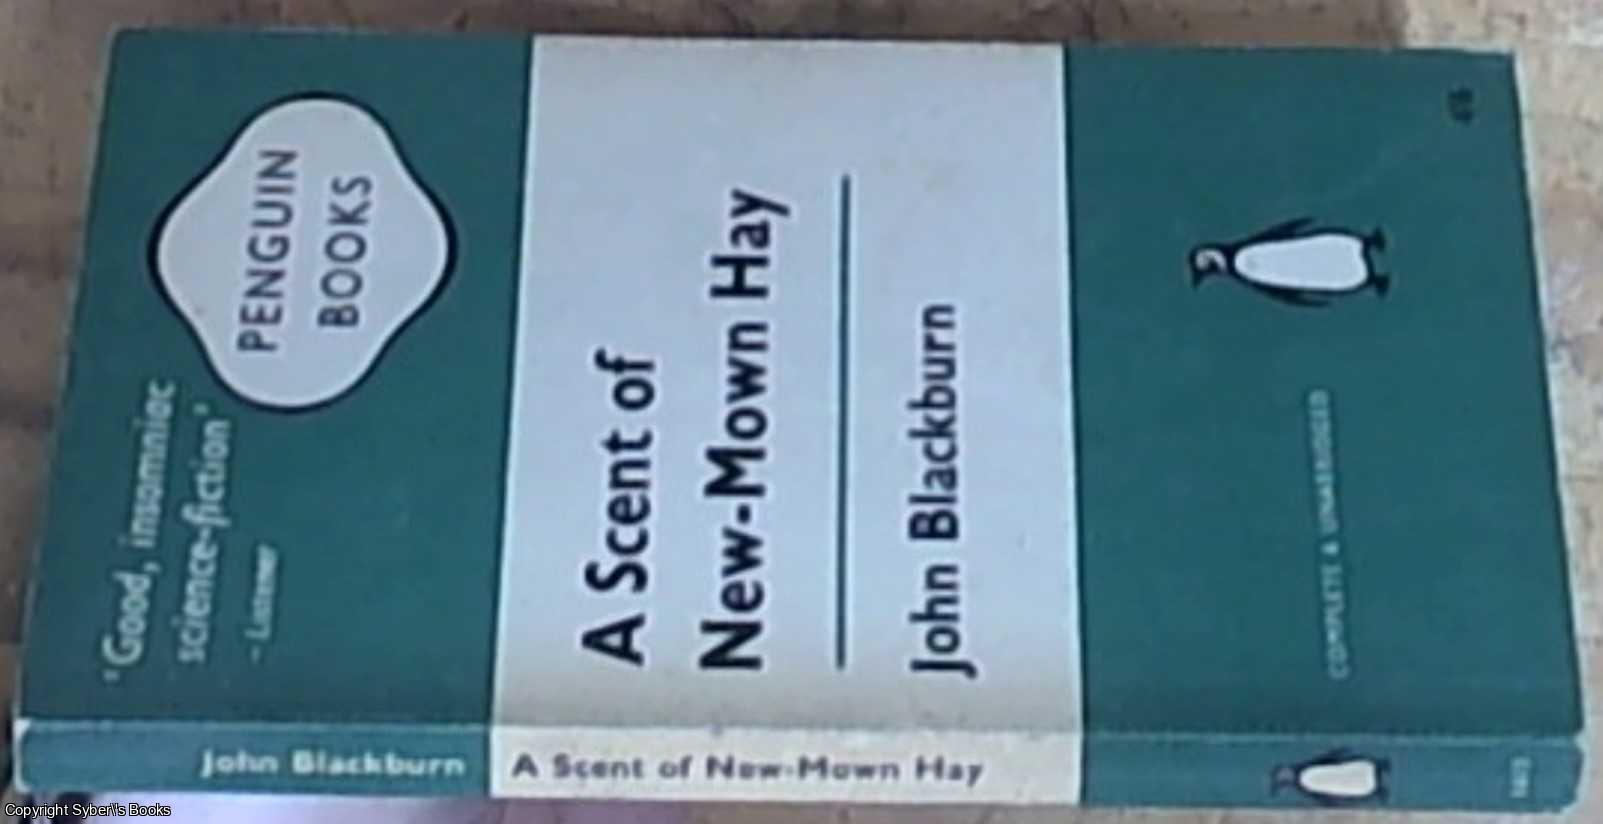 Blackburn, John - A Scent of New-Mown Hay